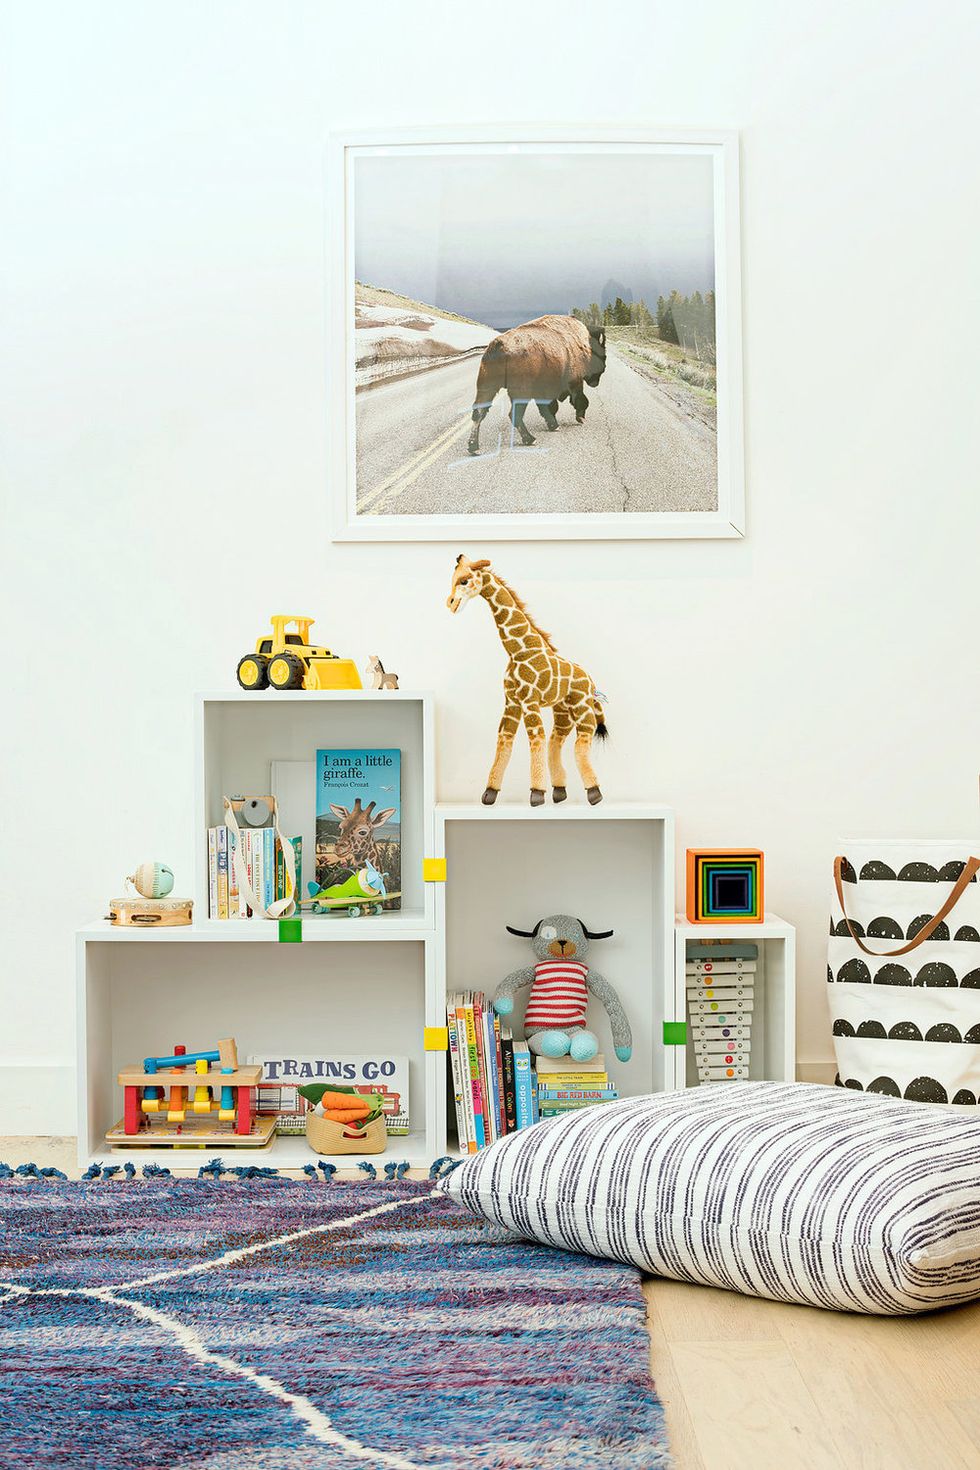 43 Genius Toy Storage Ideas for Your Kid's Room